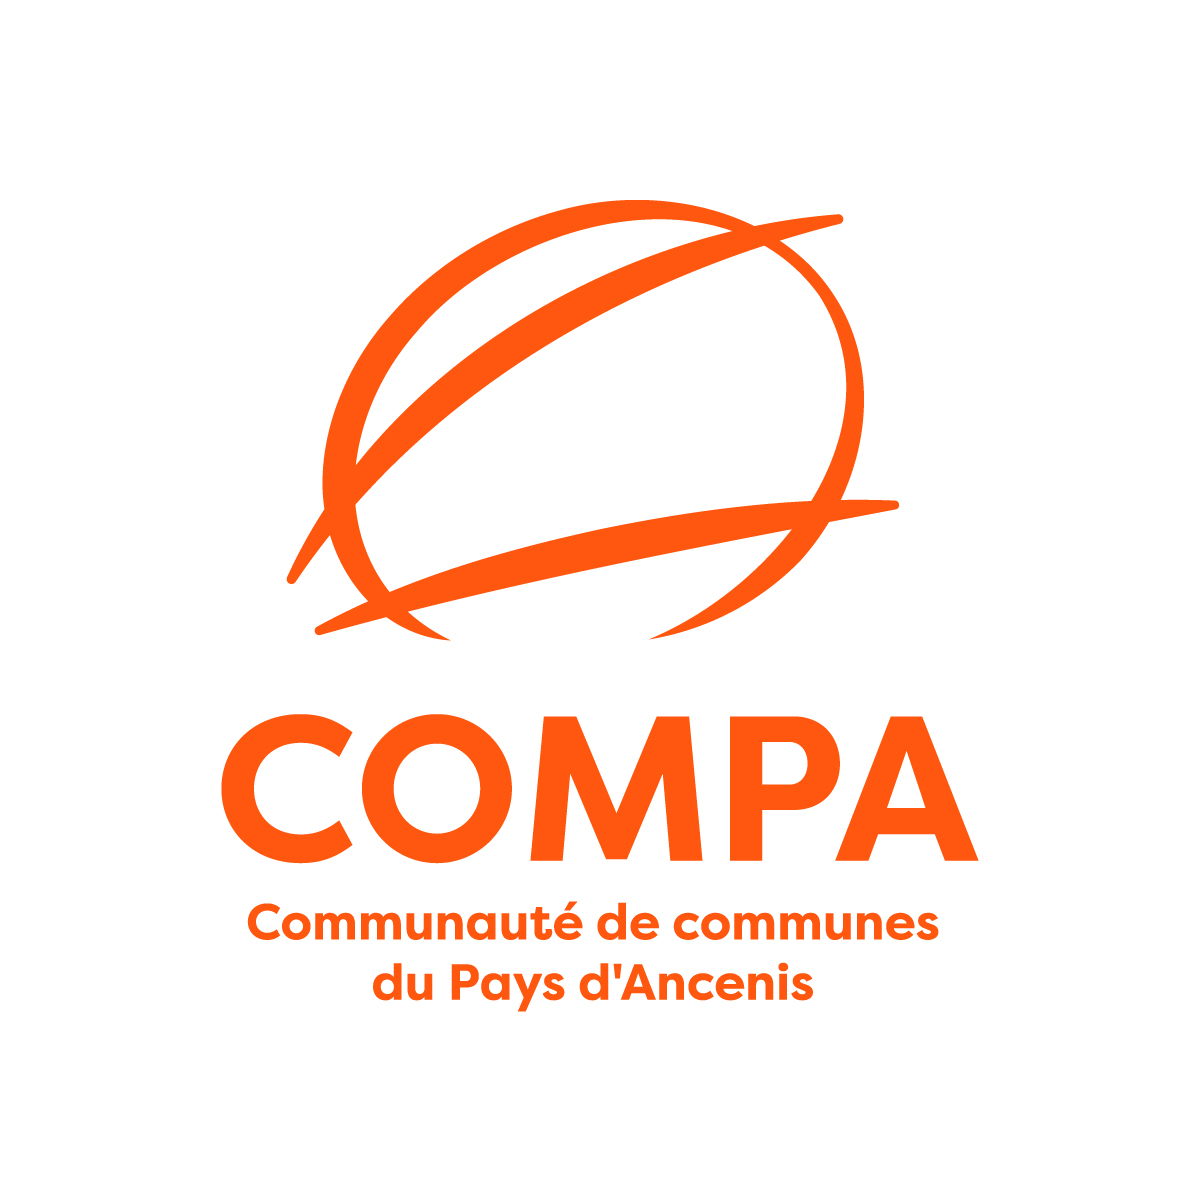 COMPA_Orange[28]